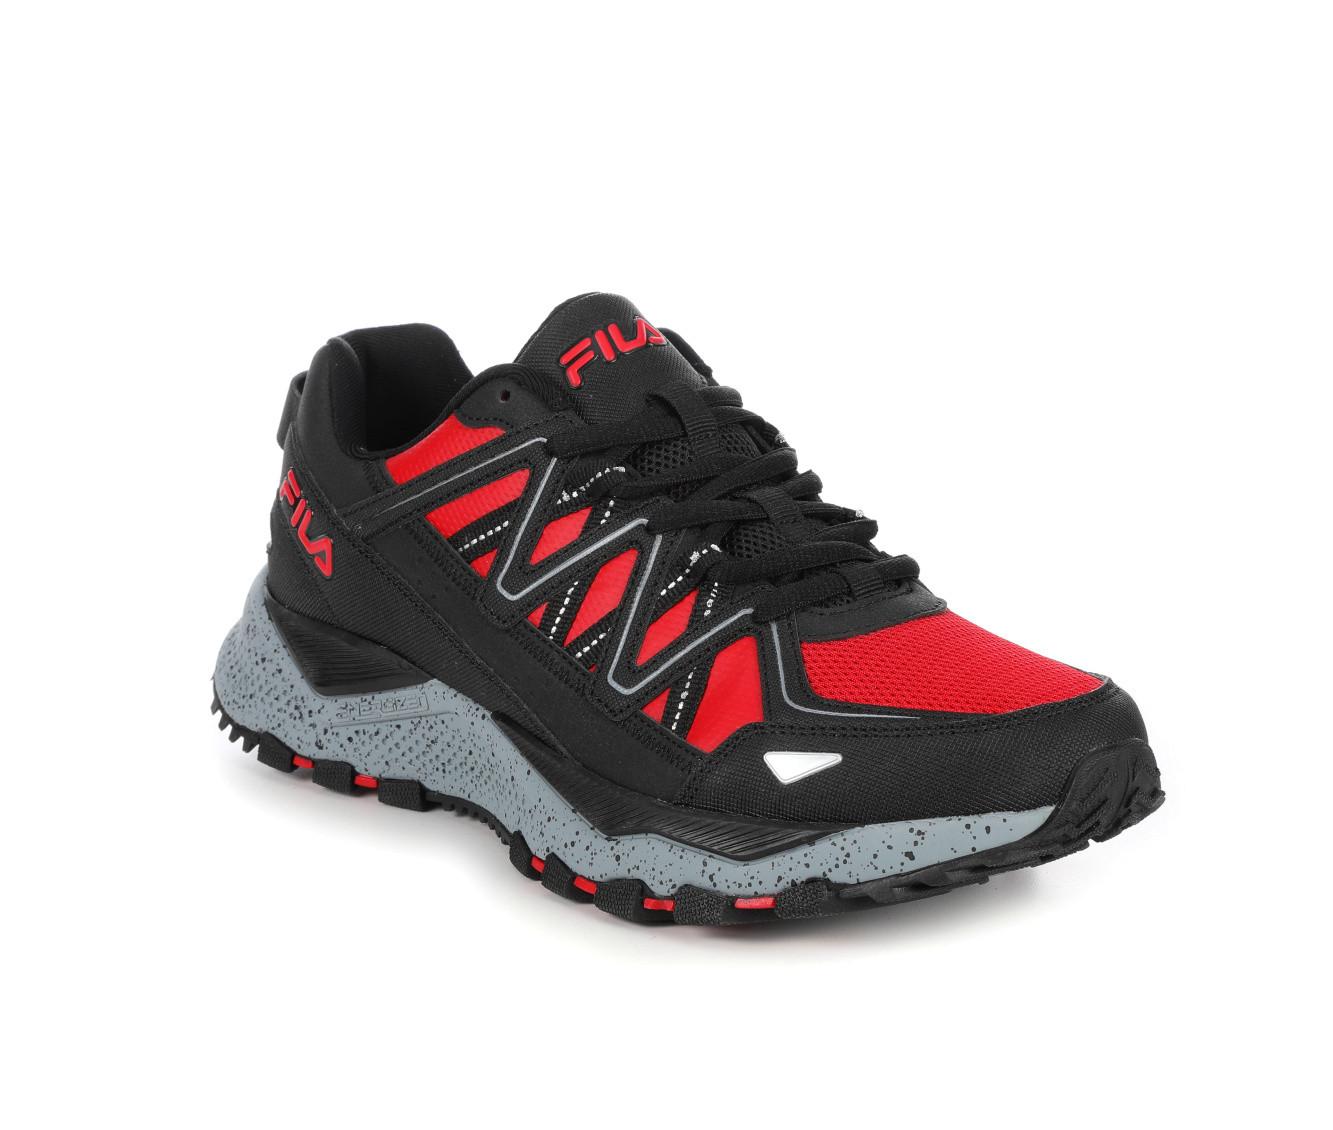 Men's Fila Firetrail Evo Trail Running Shoes